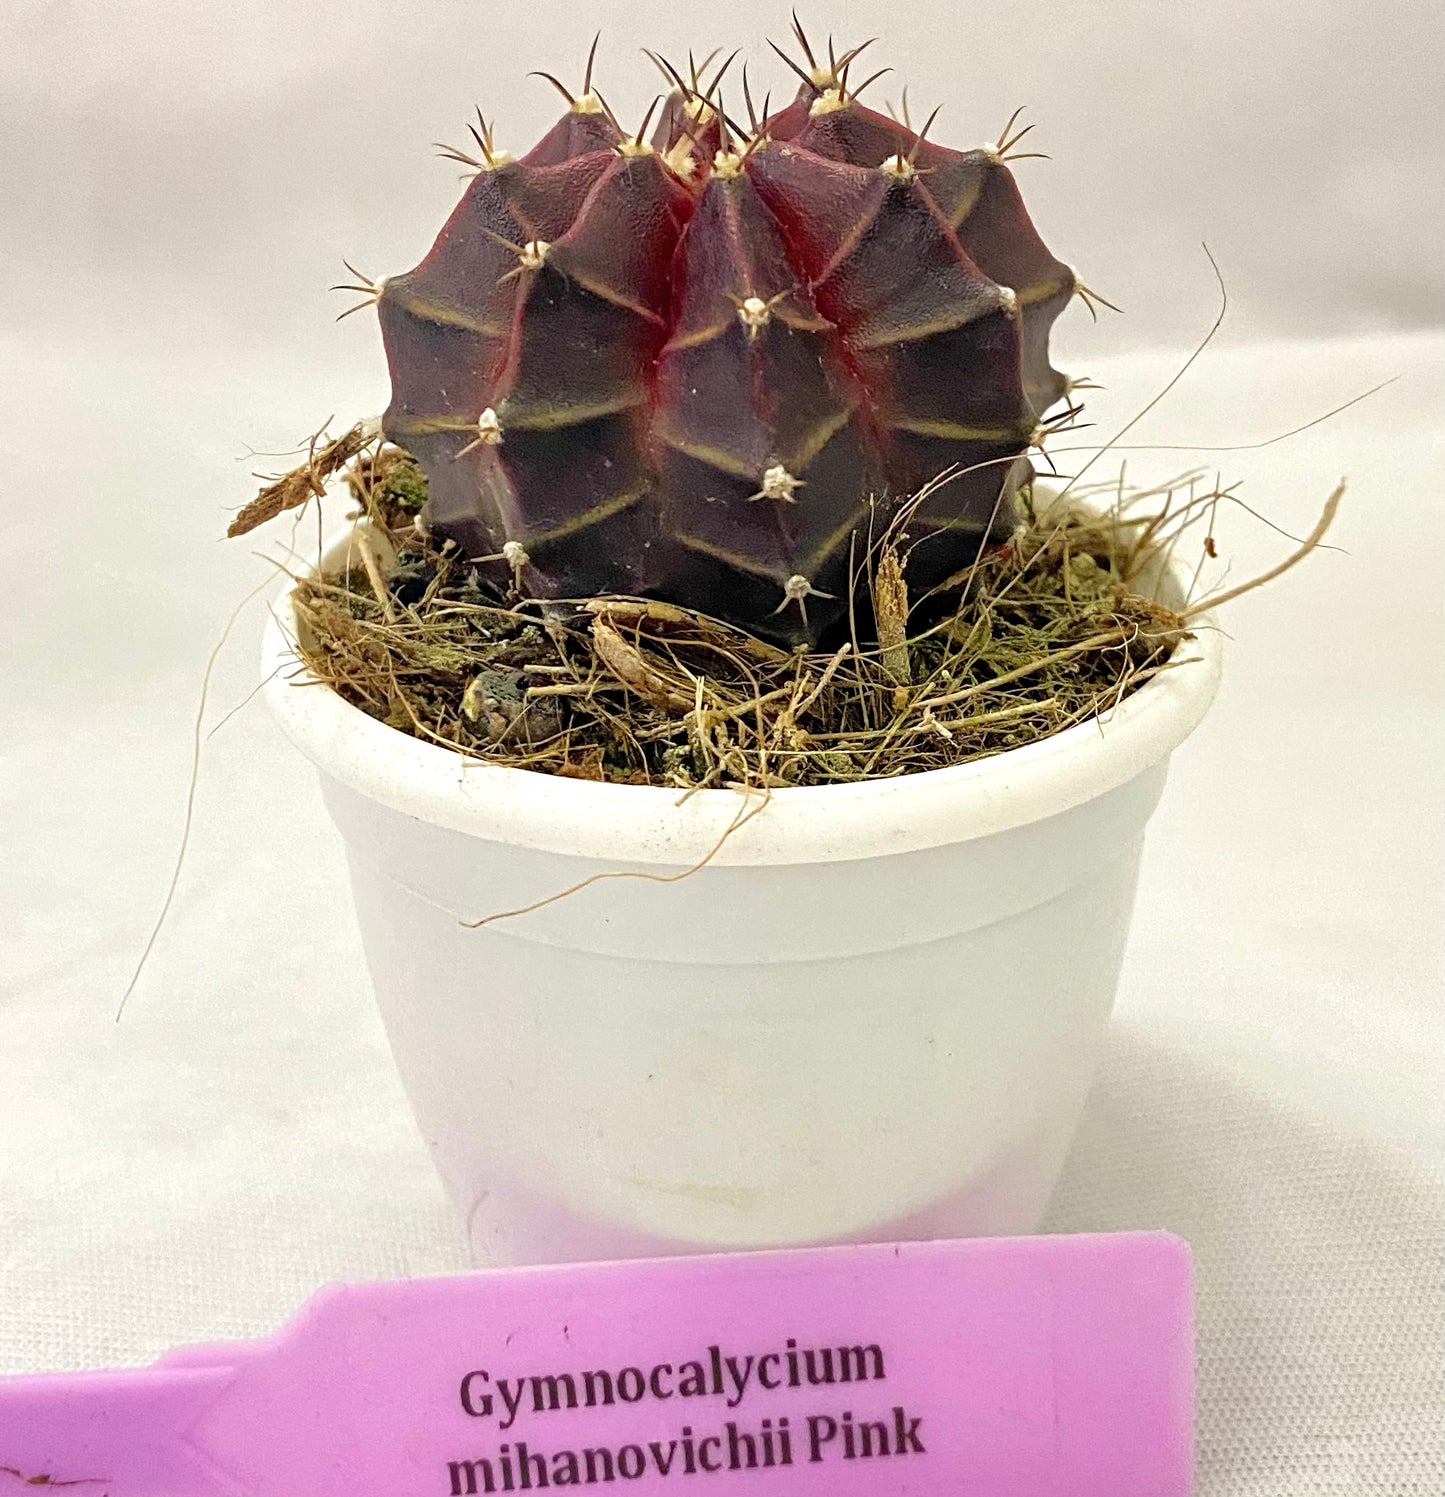 Gymnocalycium mihanovichii Pink